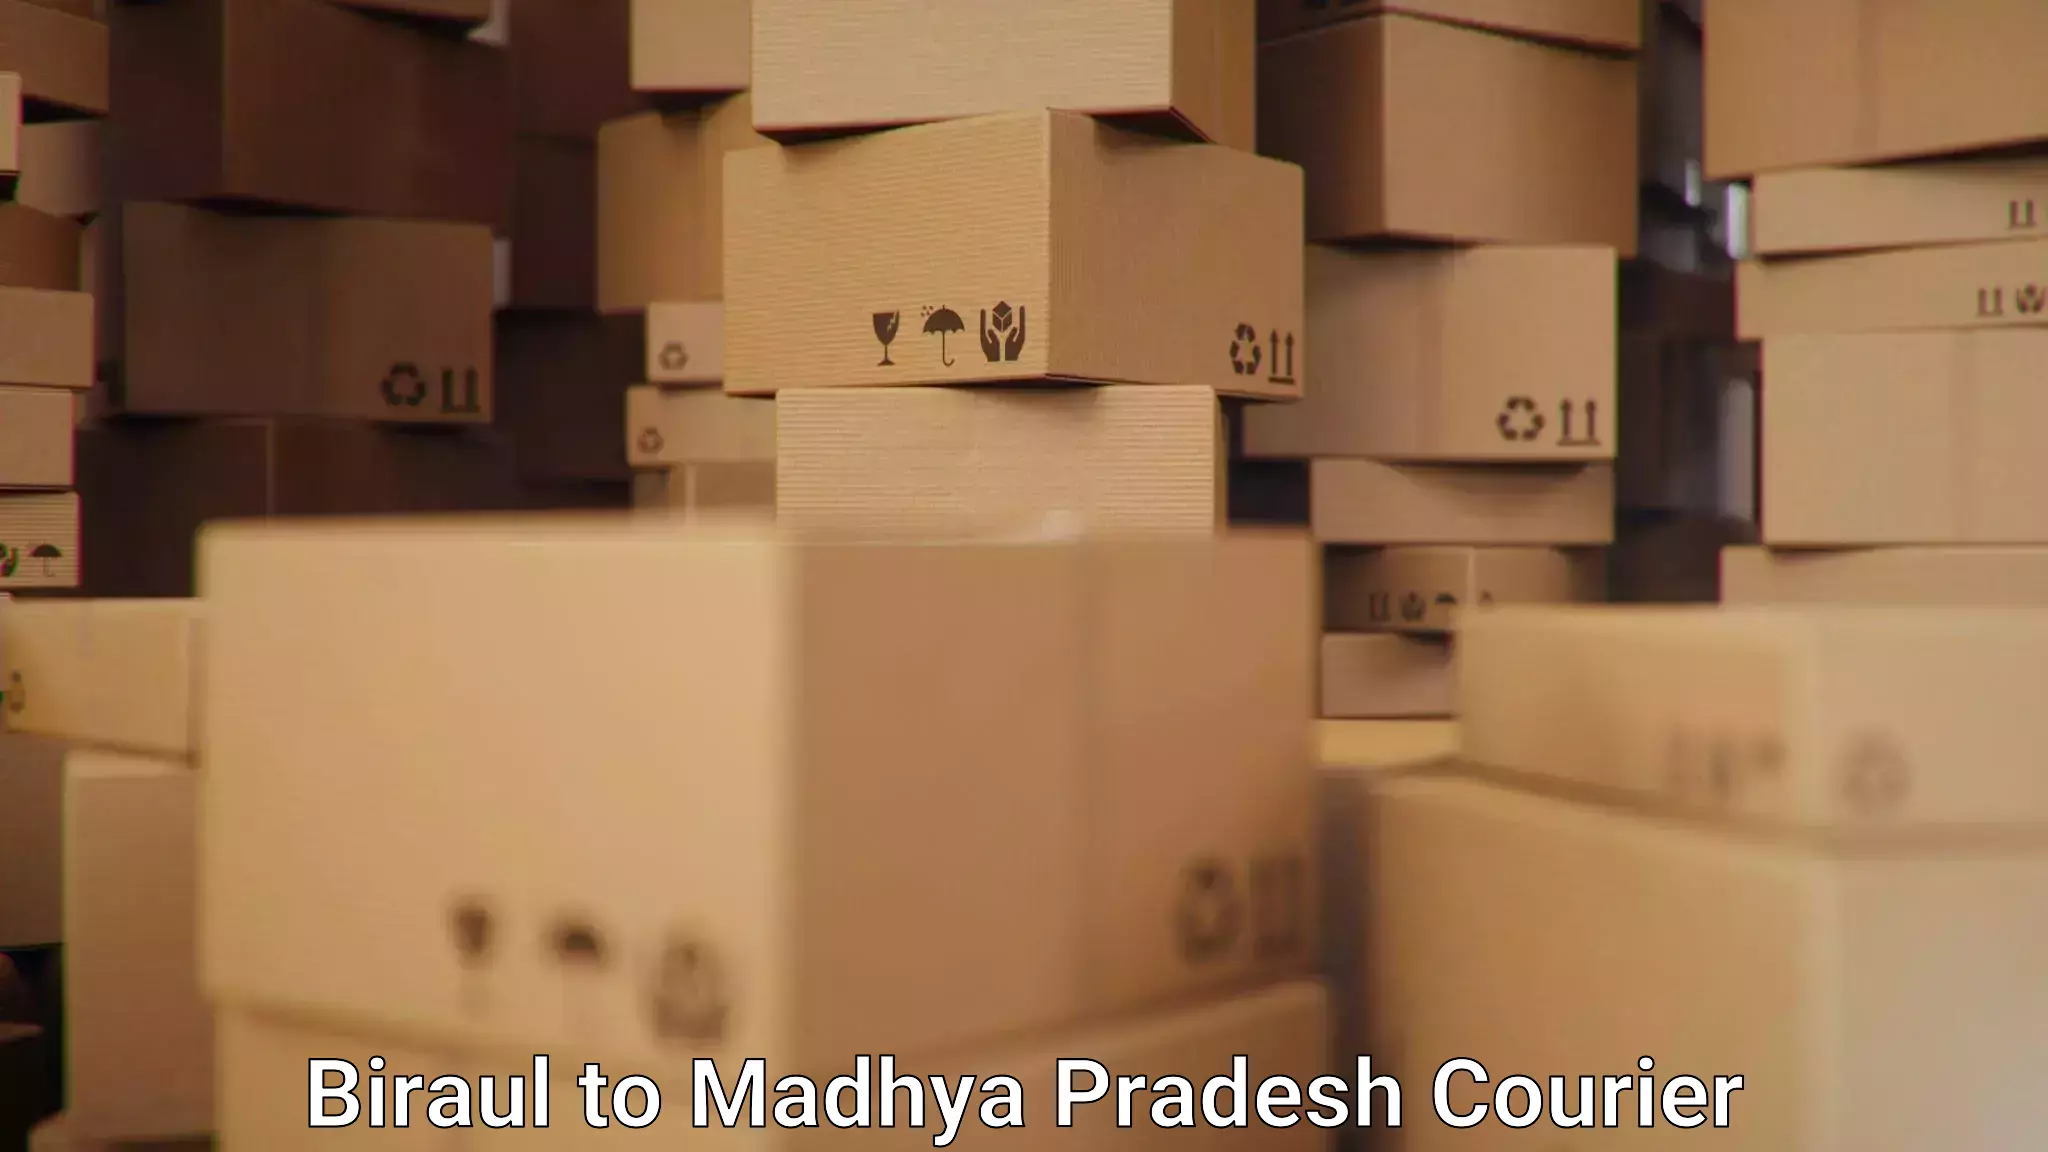 Speedy delivery service Biraul to Madhya Pradesh